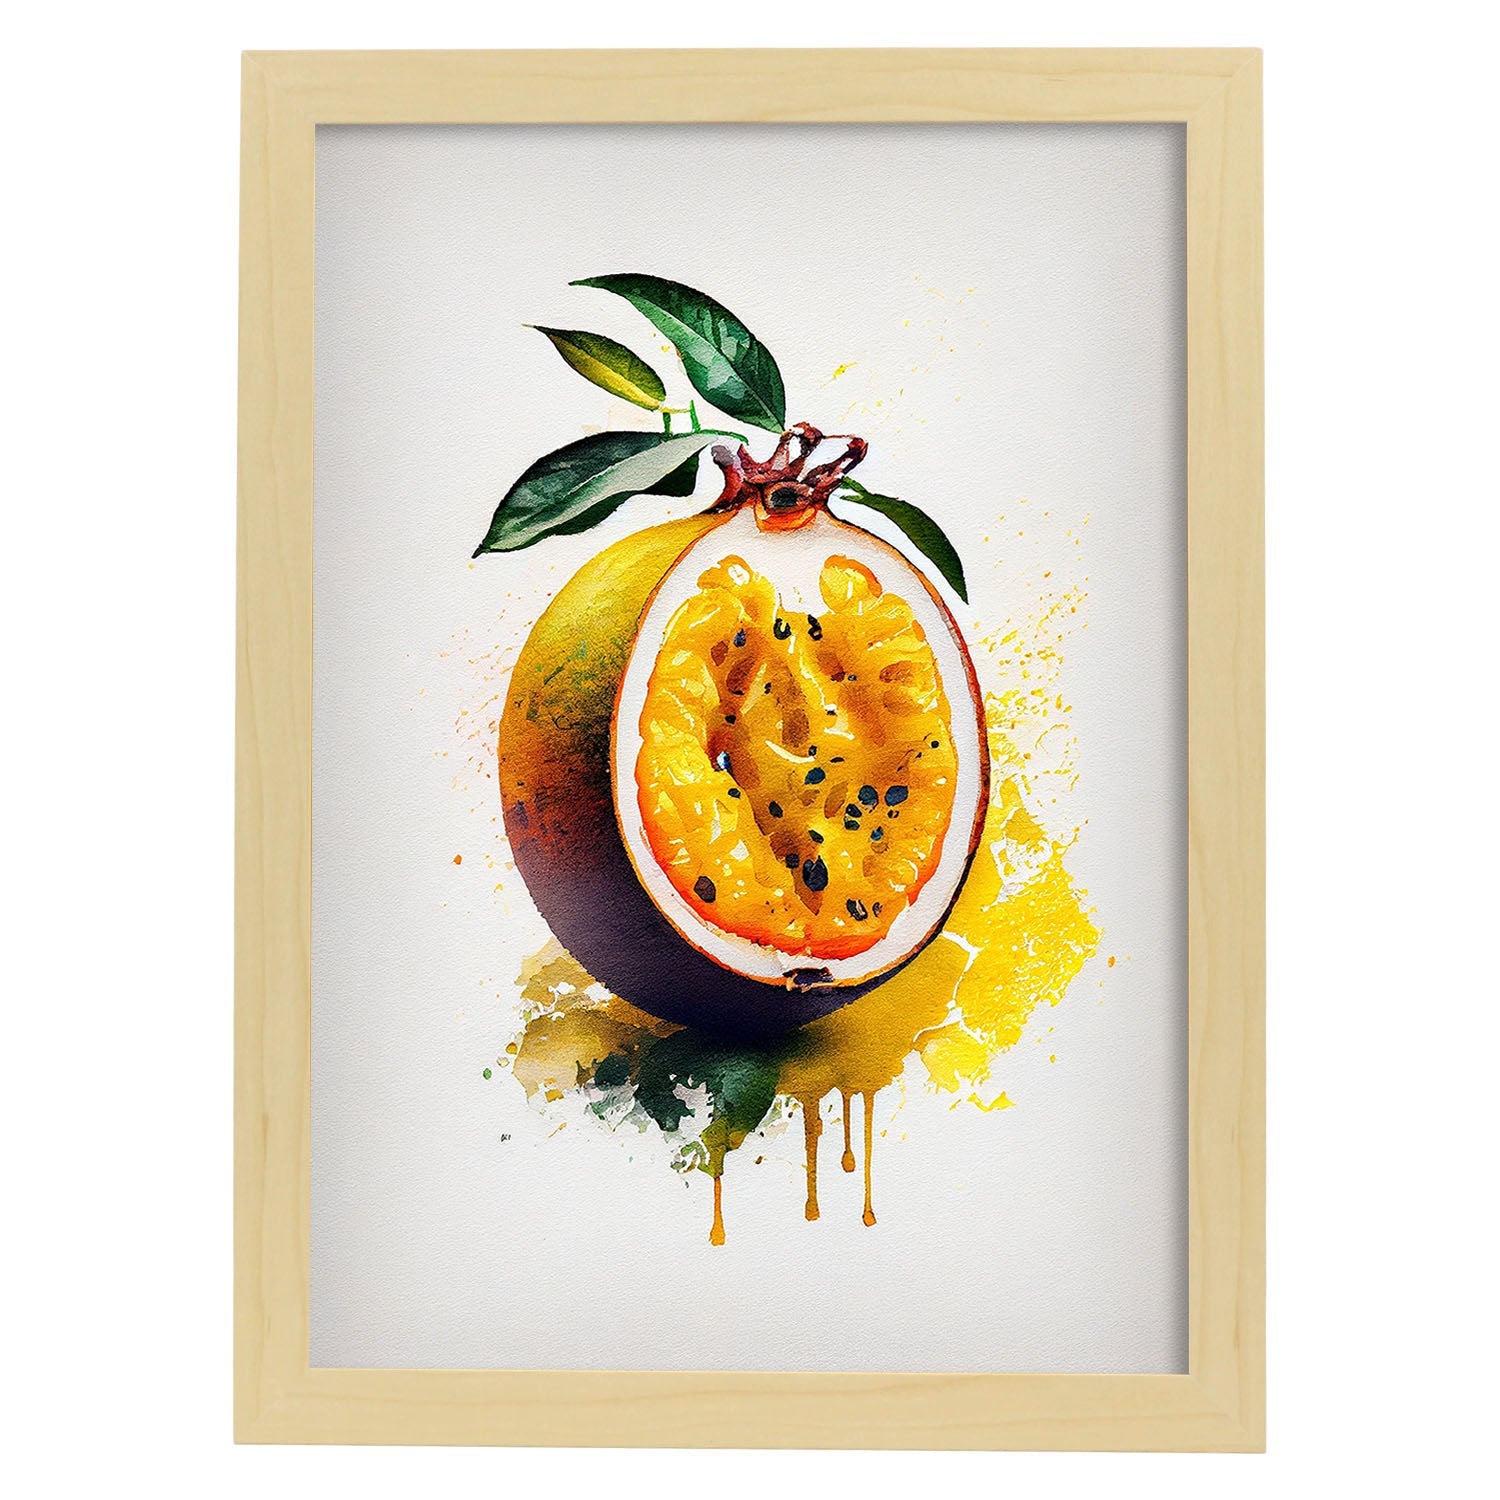 Nacnic minimalist Passionfruit_2. Aesthetic Wall Art Prints for Bedroom or Living Room Design.-Artwork-Nacnic-A4-Marco Madera Clara-Nacnic Estudio SL